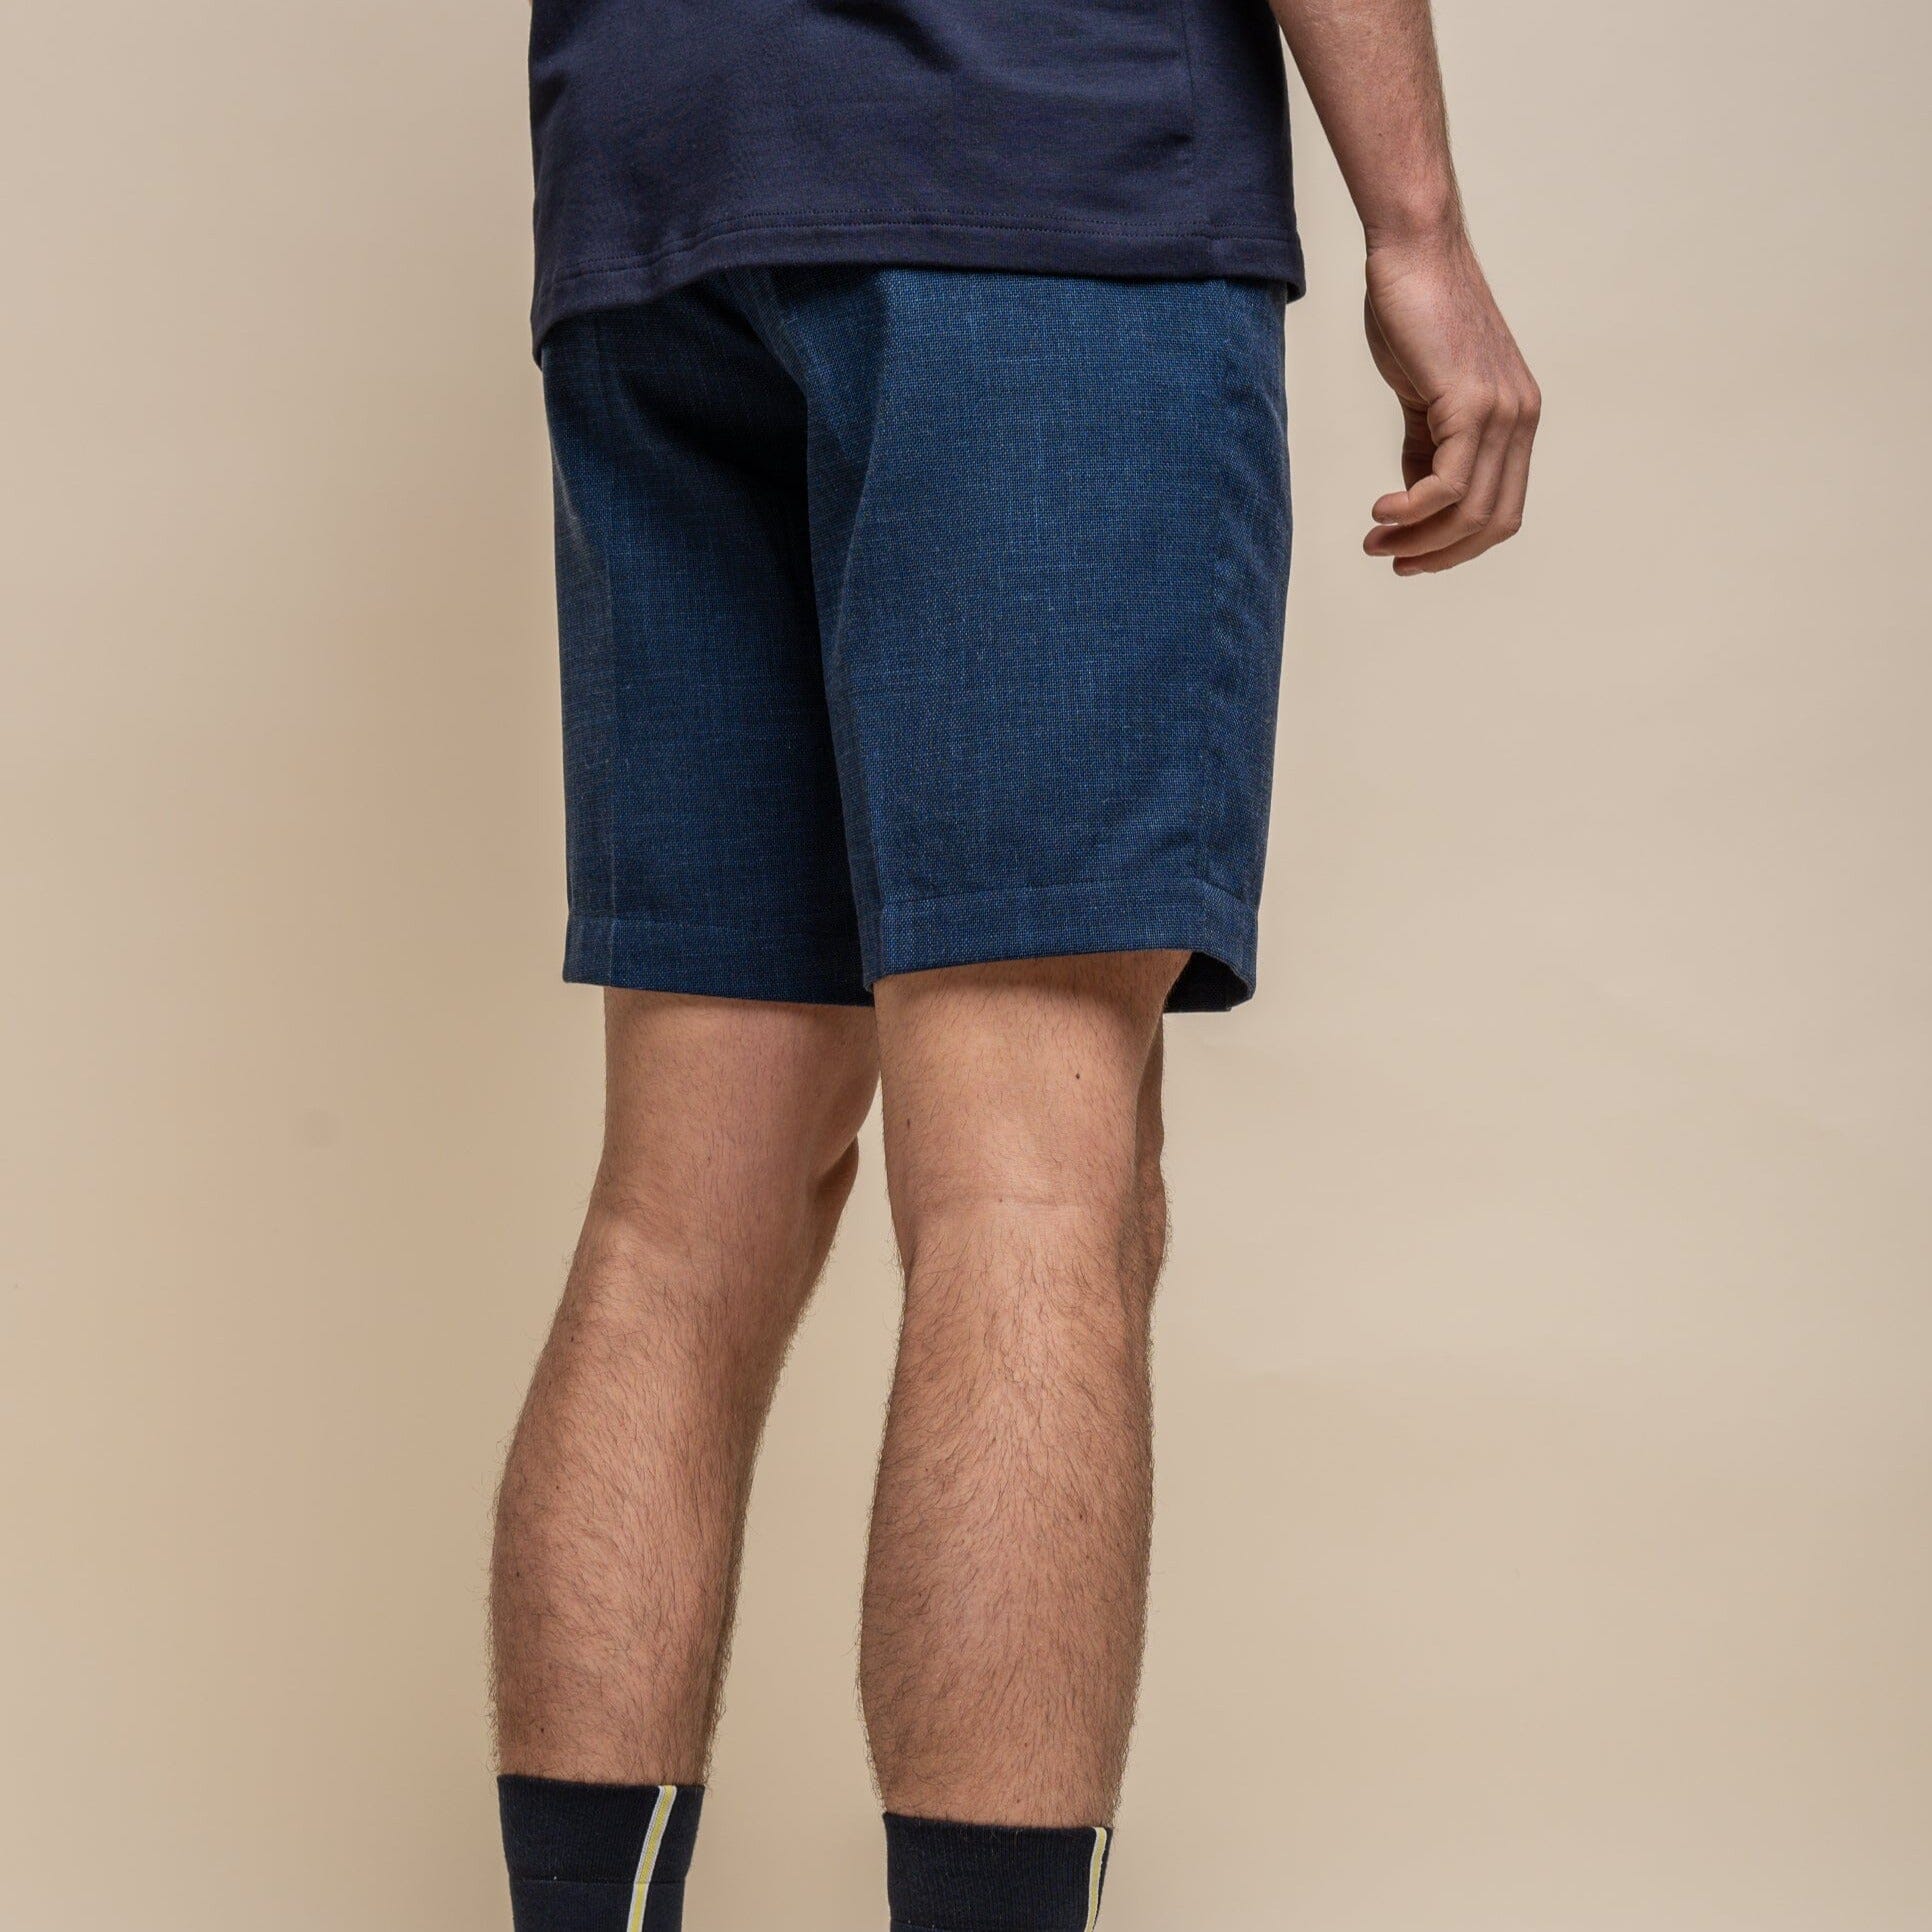 Miami Blue Shorts - Shorts - - THREADPEPPER